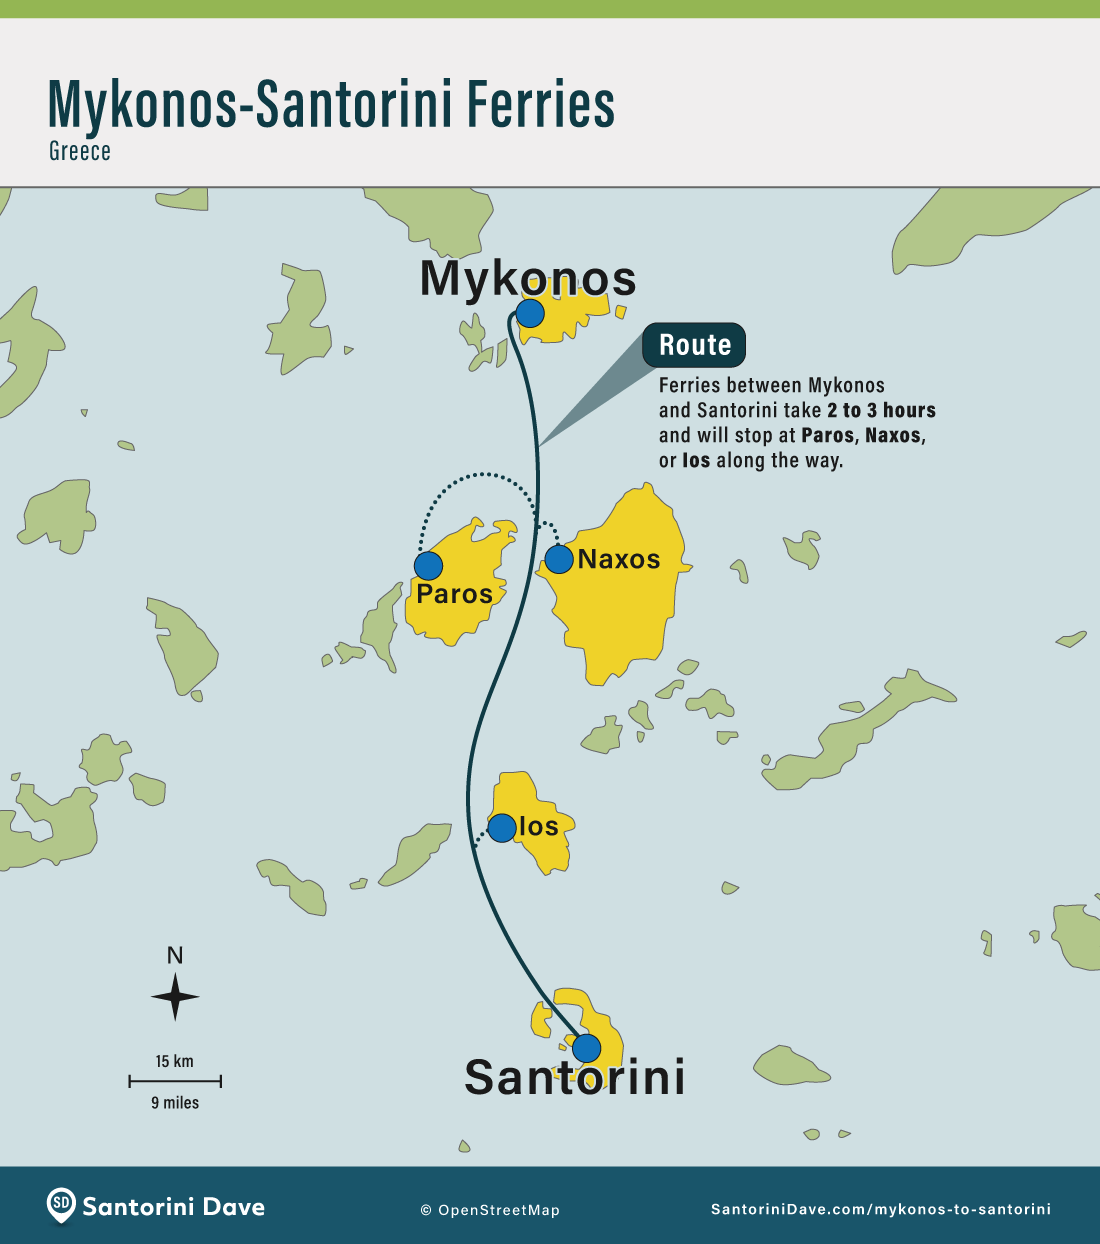 Mykonos-Santorini Ferry Routes